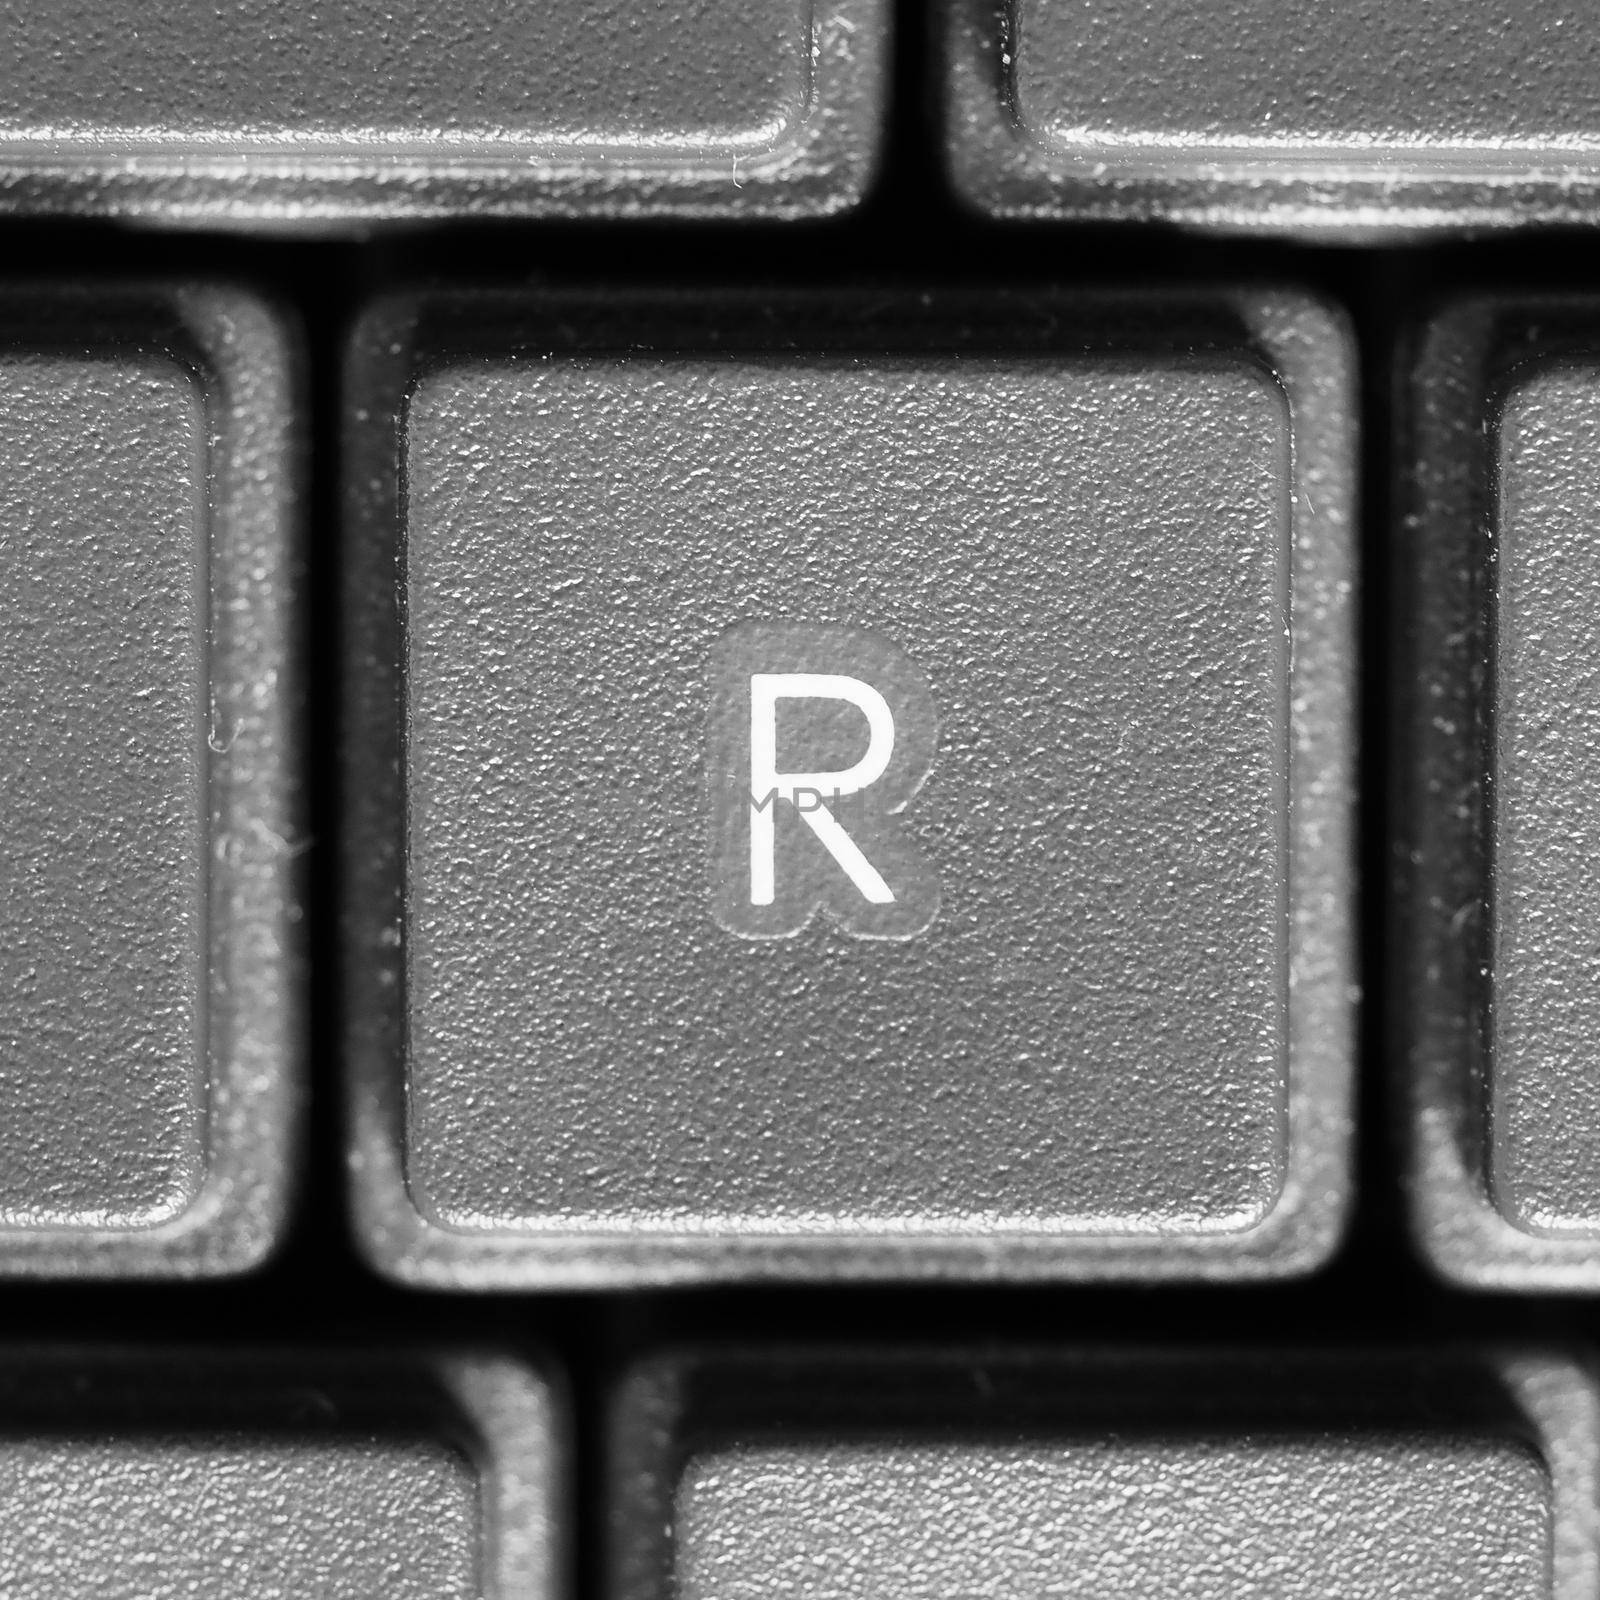 Letter R key on computer keyboard keypad